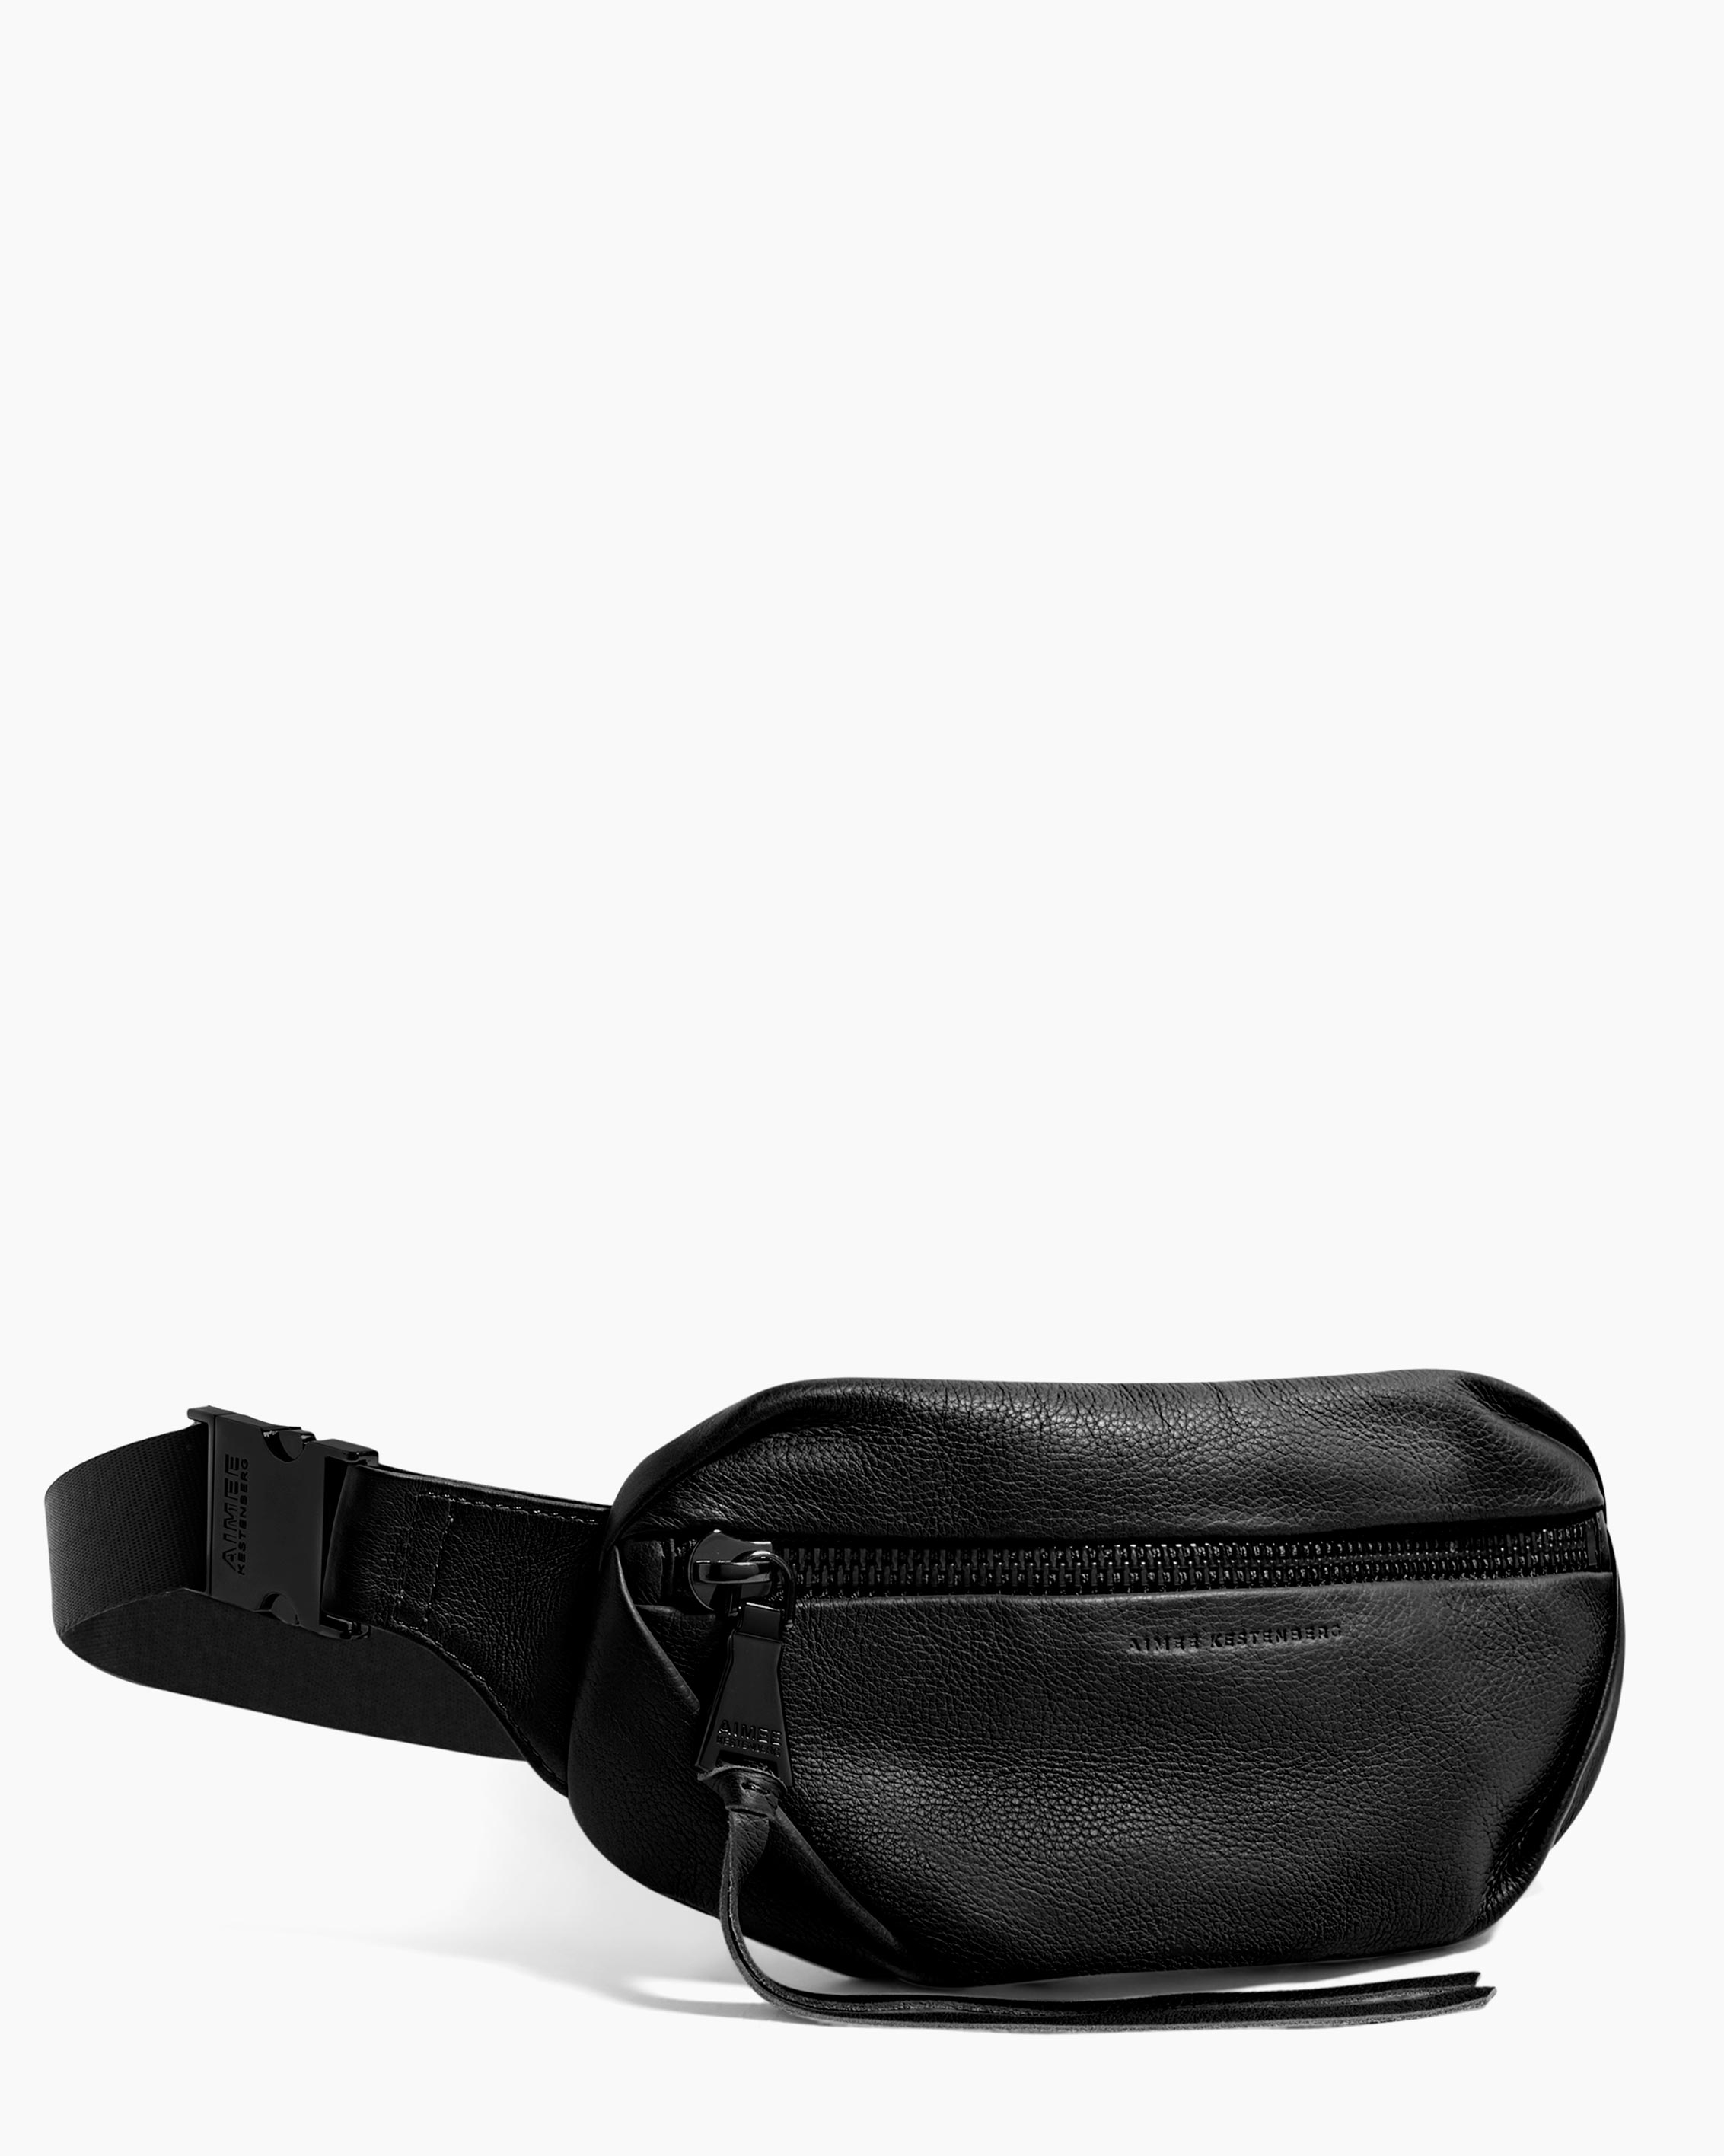 Aimee Kestenberg | Milan Bum Bag Black With Shiny Black Hardware